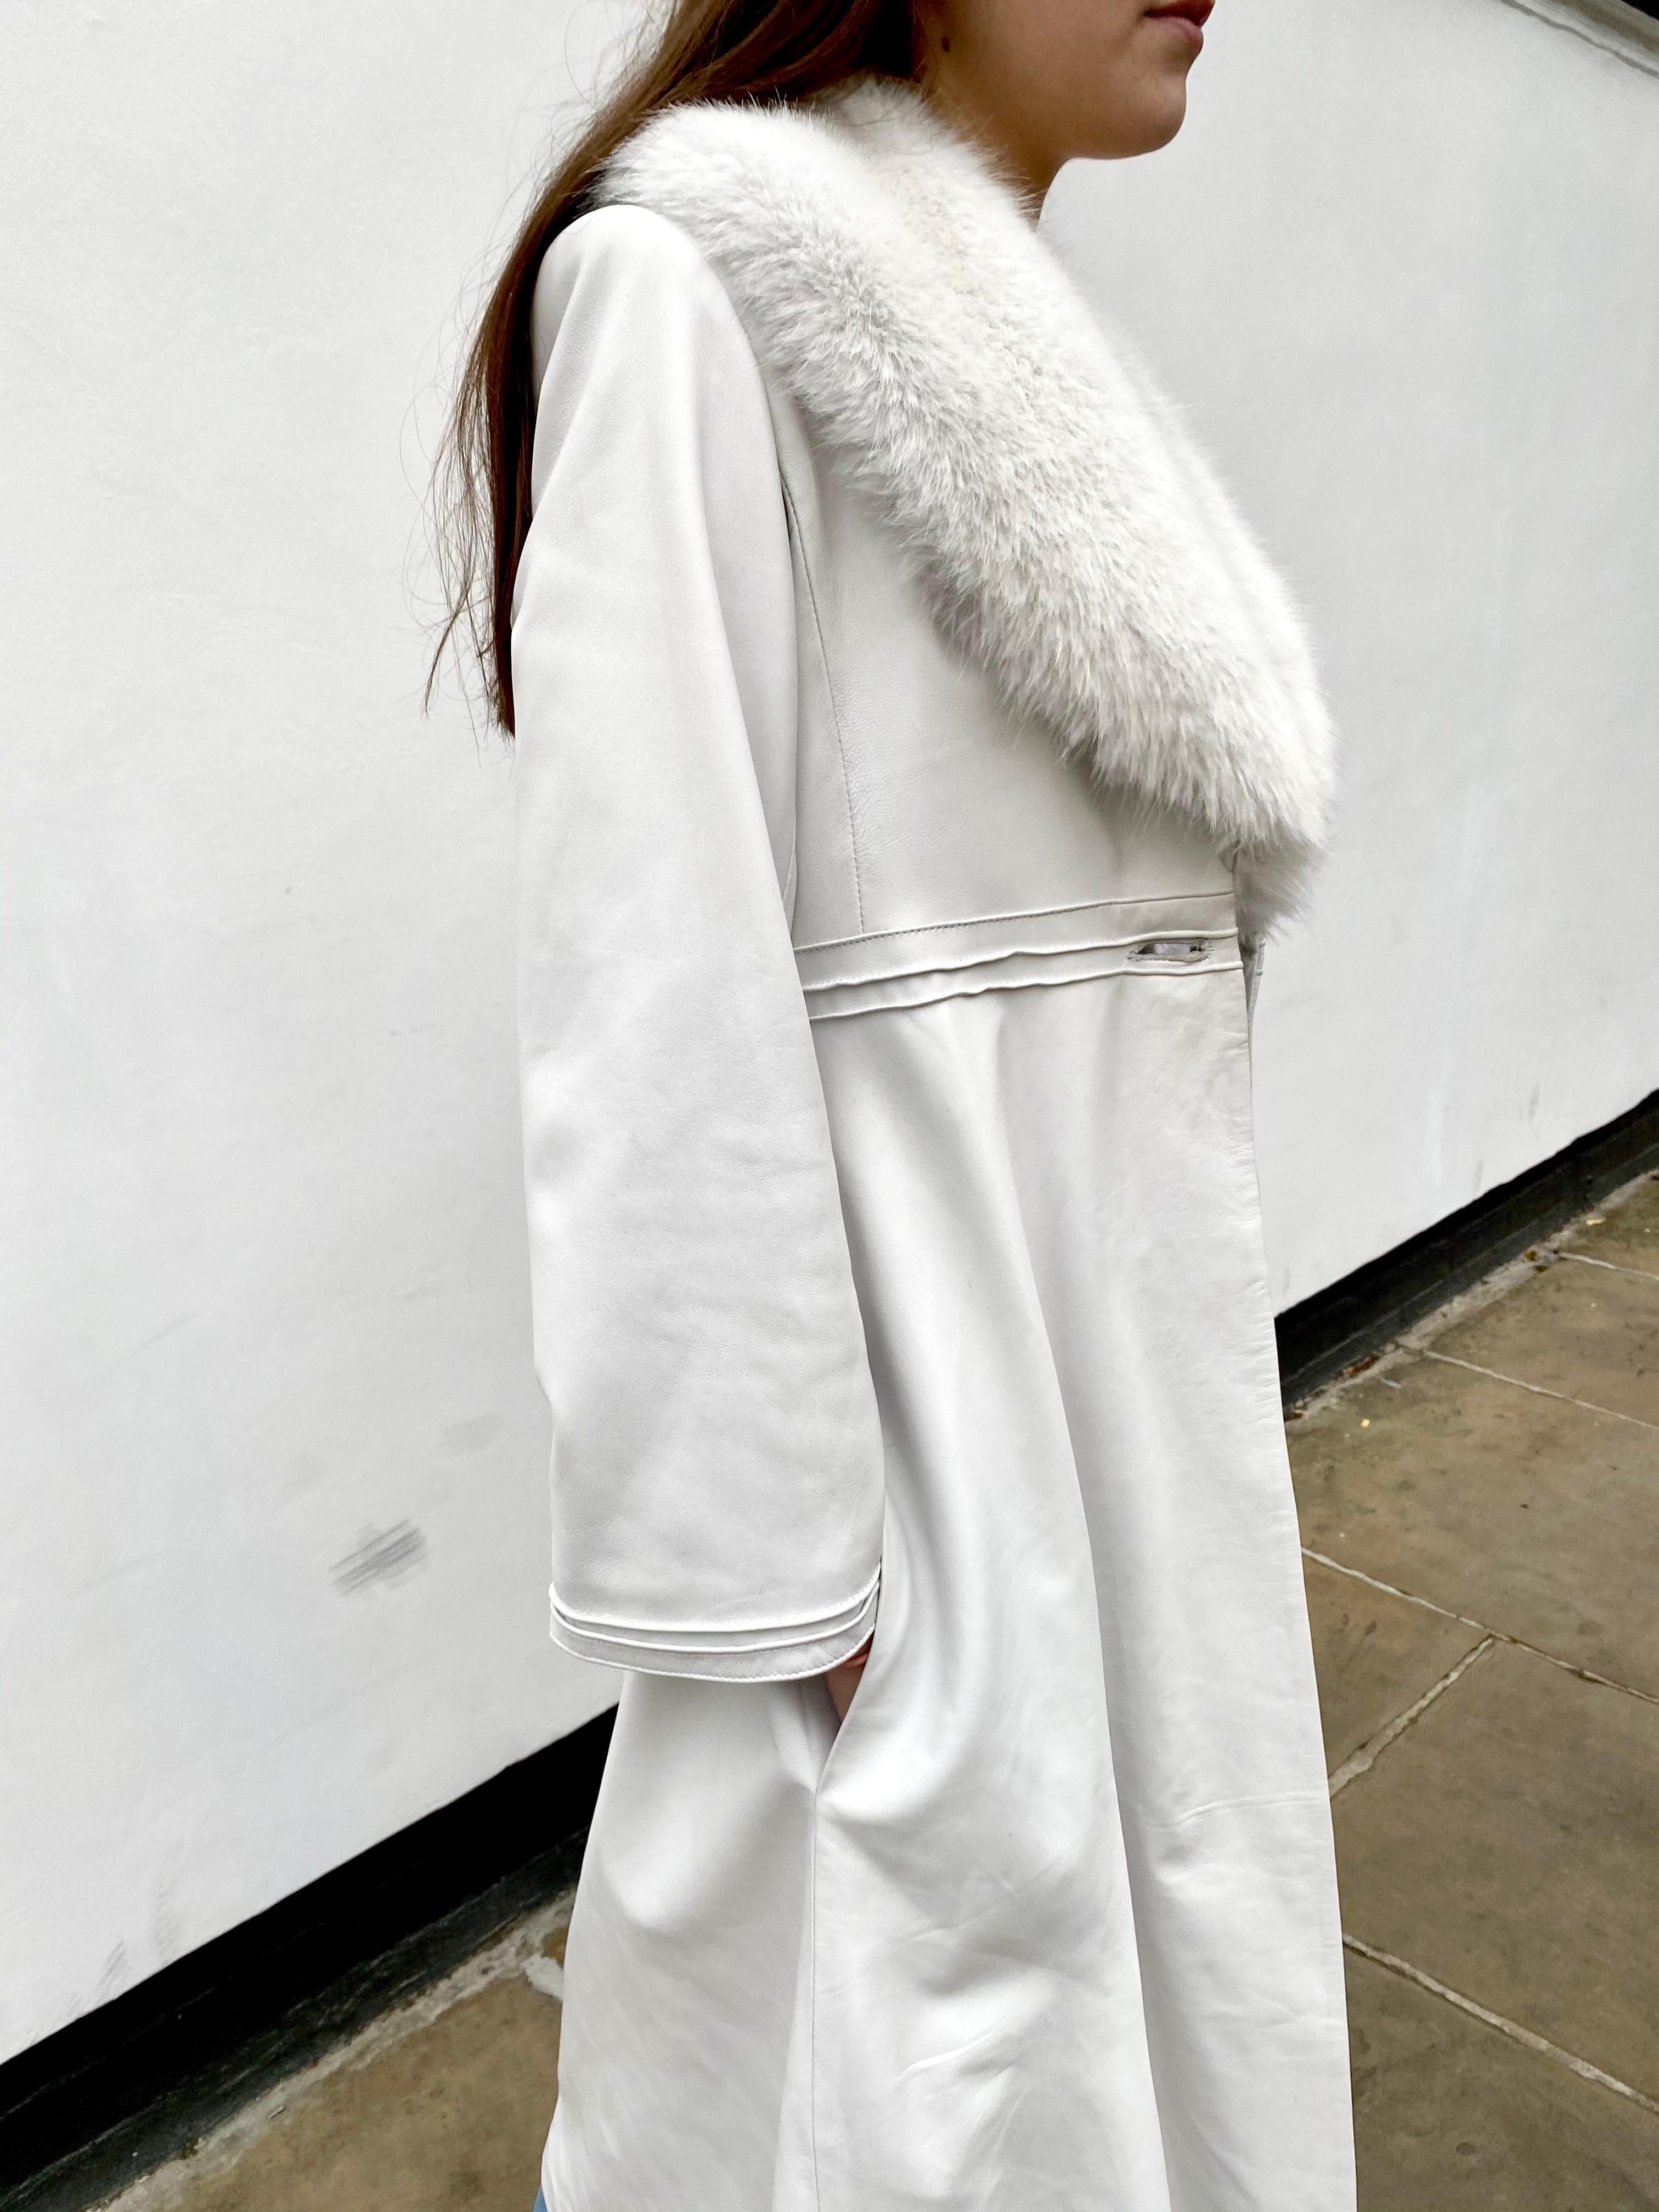 Verheyen London Edward Leather Coat in White with Faux Fur - Size uk 12  For Sale 7